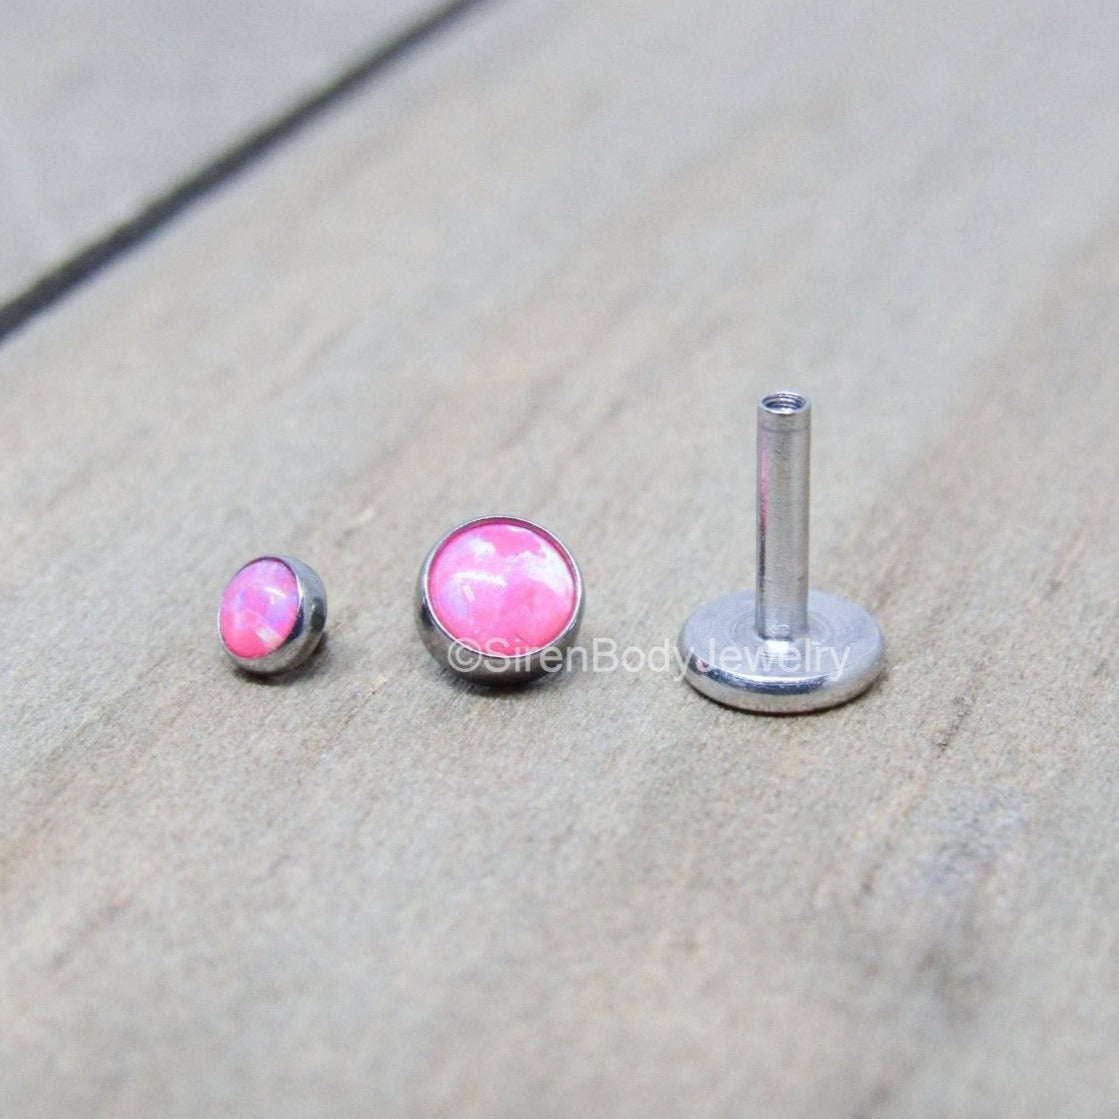 Pink opal flat back earring 16g pick your length conch earlobe lip helix piercing stud earring hypoallergenic titanium internally threaded - SirenBodyJewelry